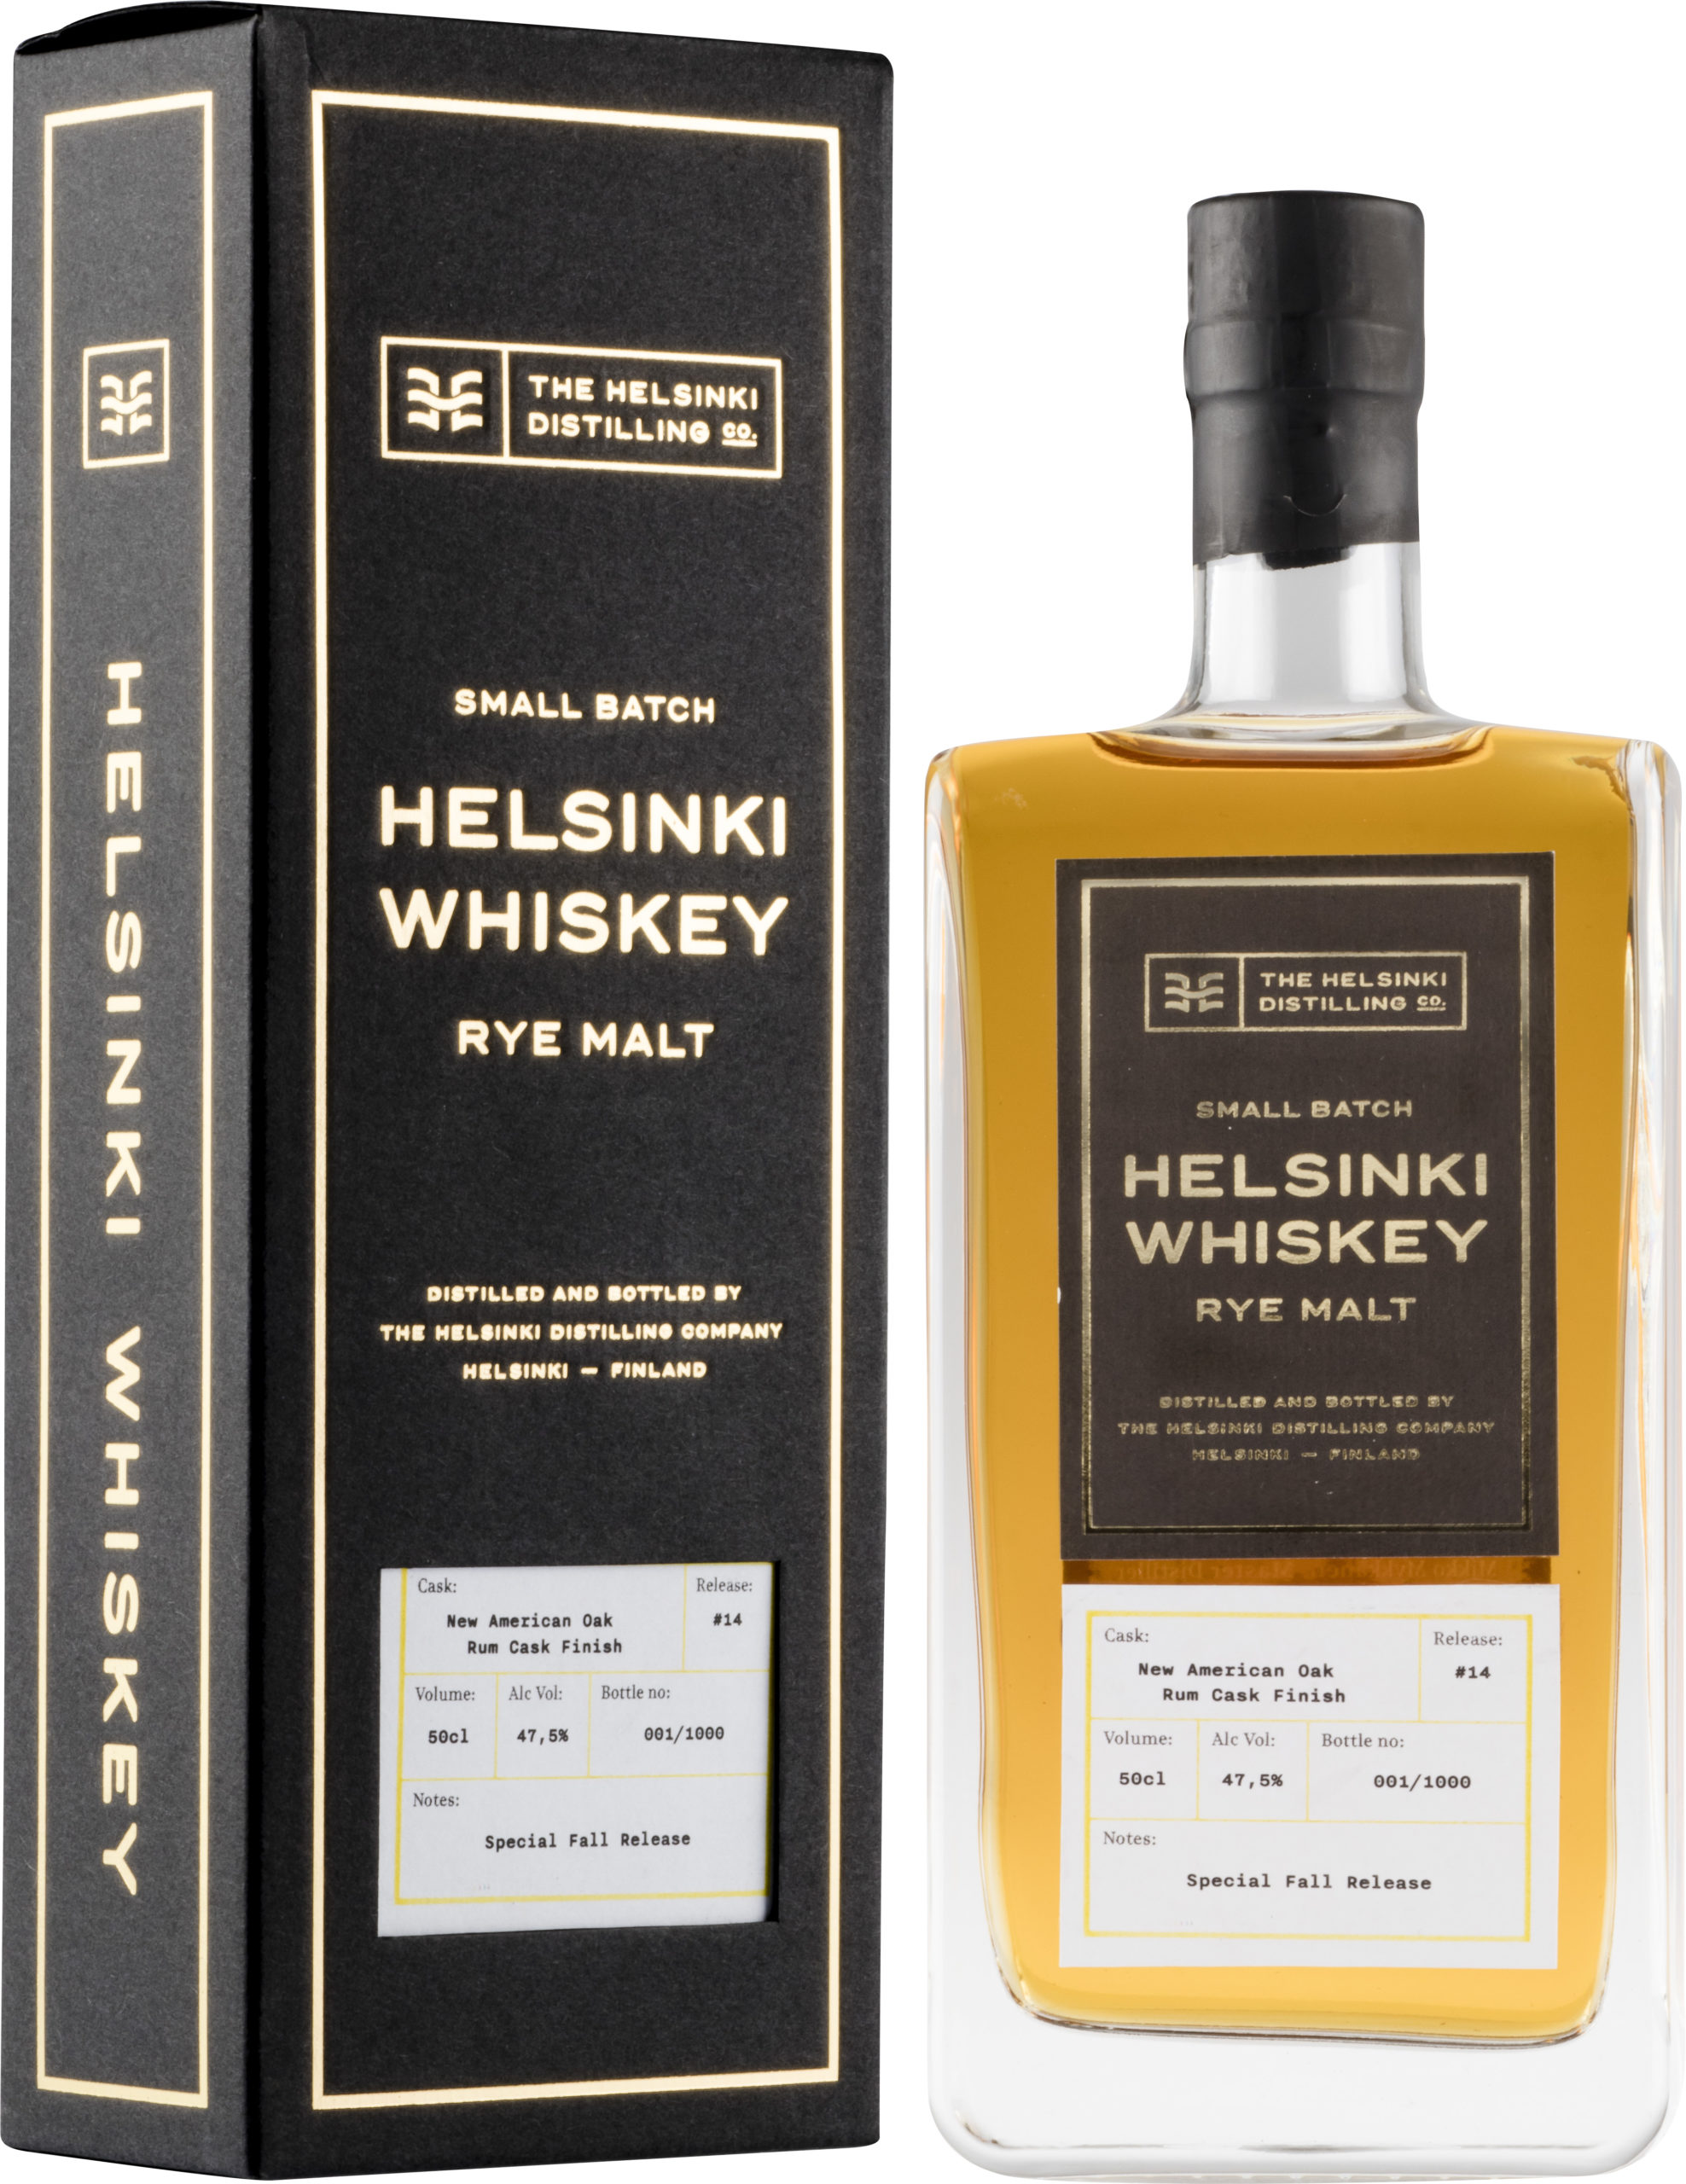 Helsinki Whiskey Release #14 Rum Cask Finish Rye Malt